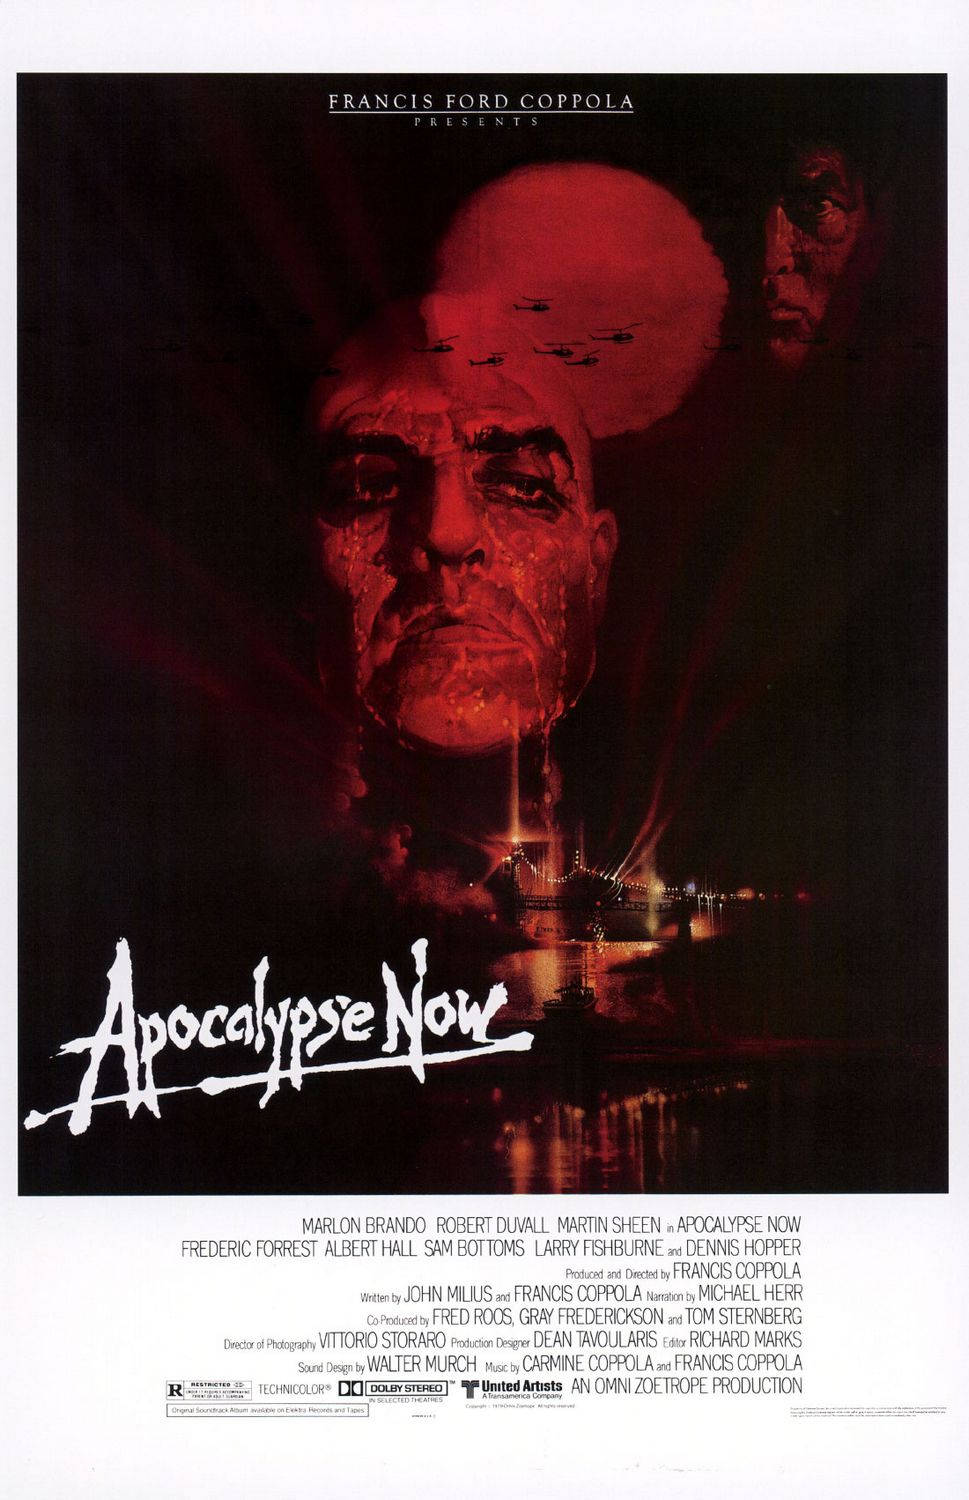 Apocalypsenow Marlon Brando Silhouette: Apocalypse Now Marlon Brando Silhouette. Wallpaper